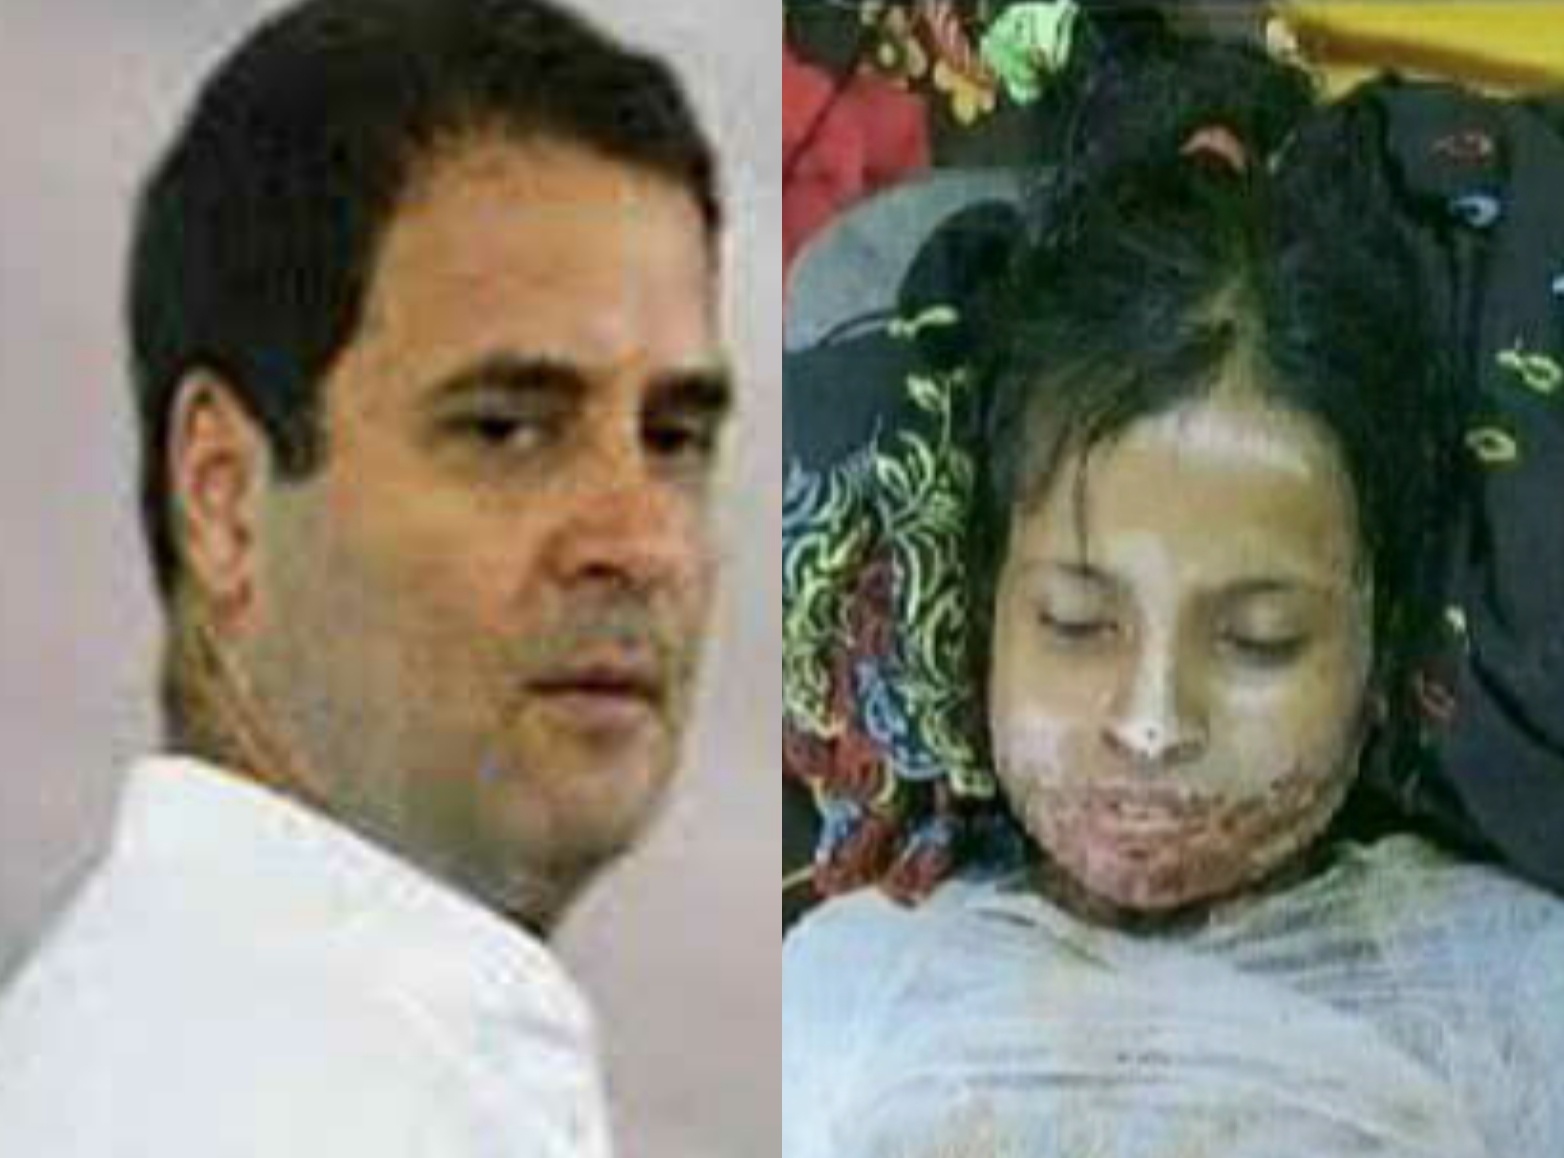 incident of burning alive suppressed to hide bad governance in Bihar: Rahul